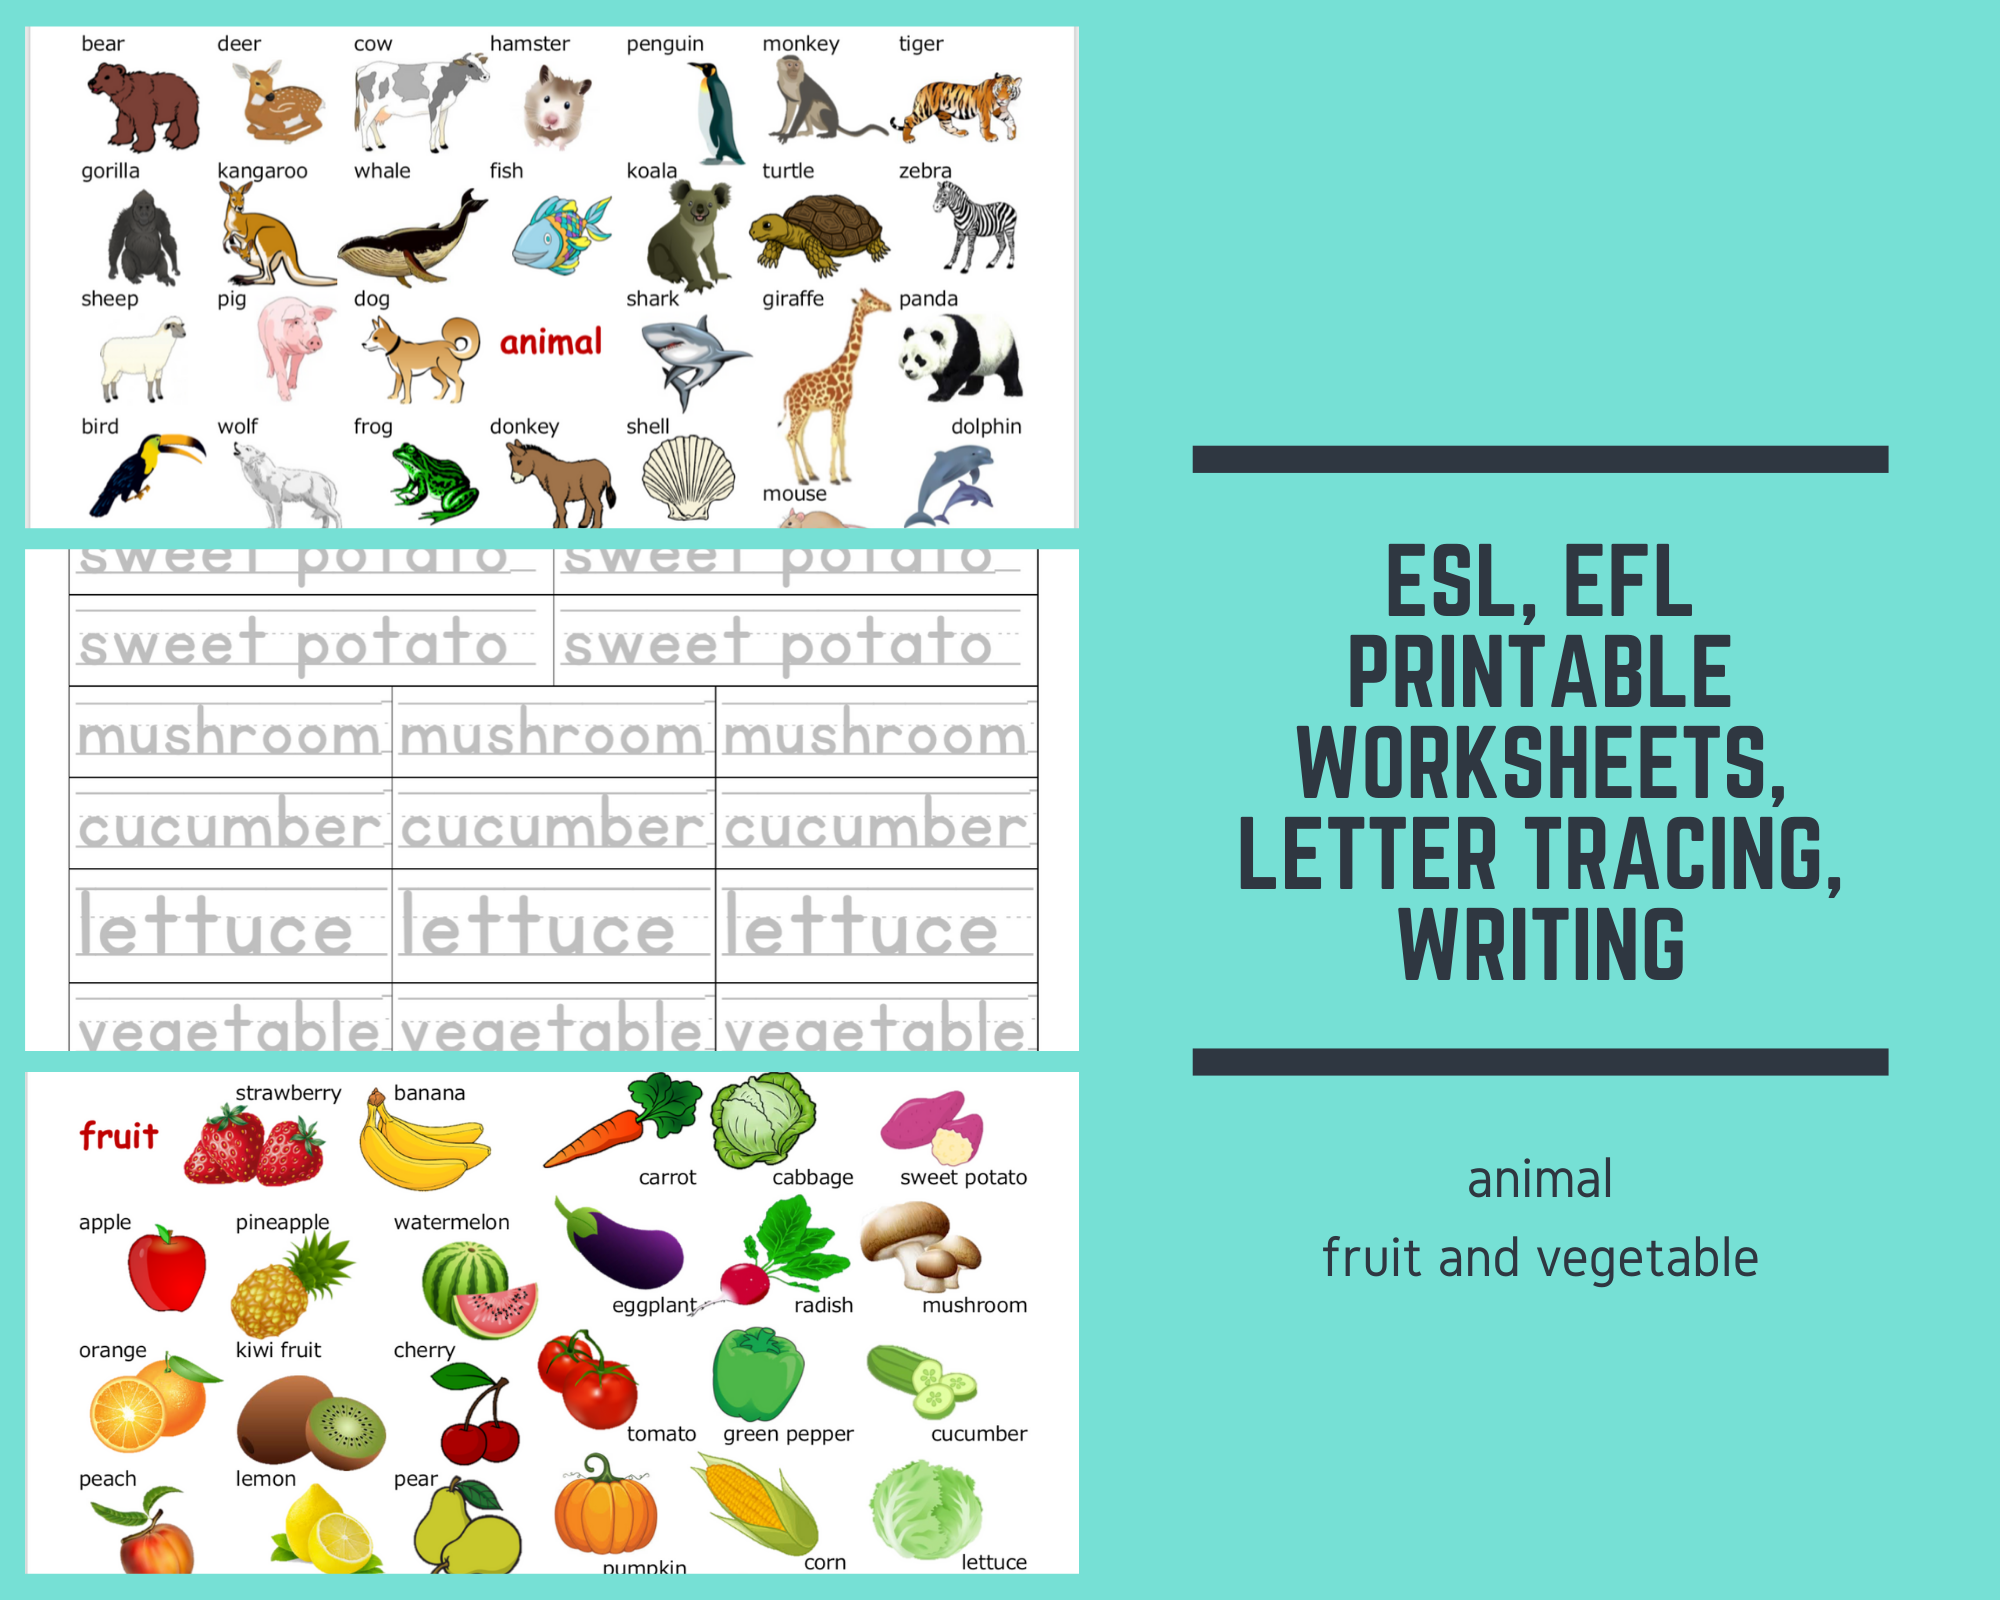 ESL, EFL printable worksheets, Letter tracing, Writing - Animal, fruit and vegetable